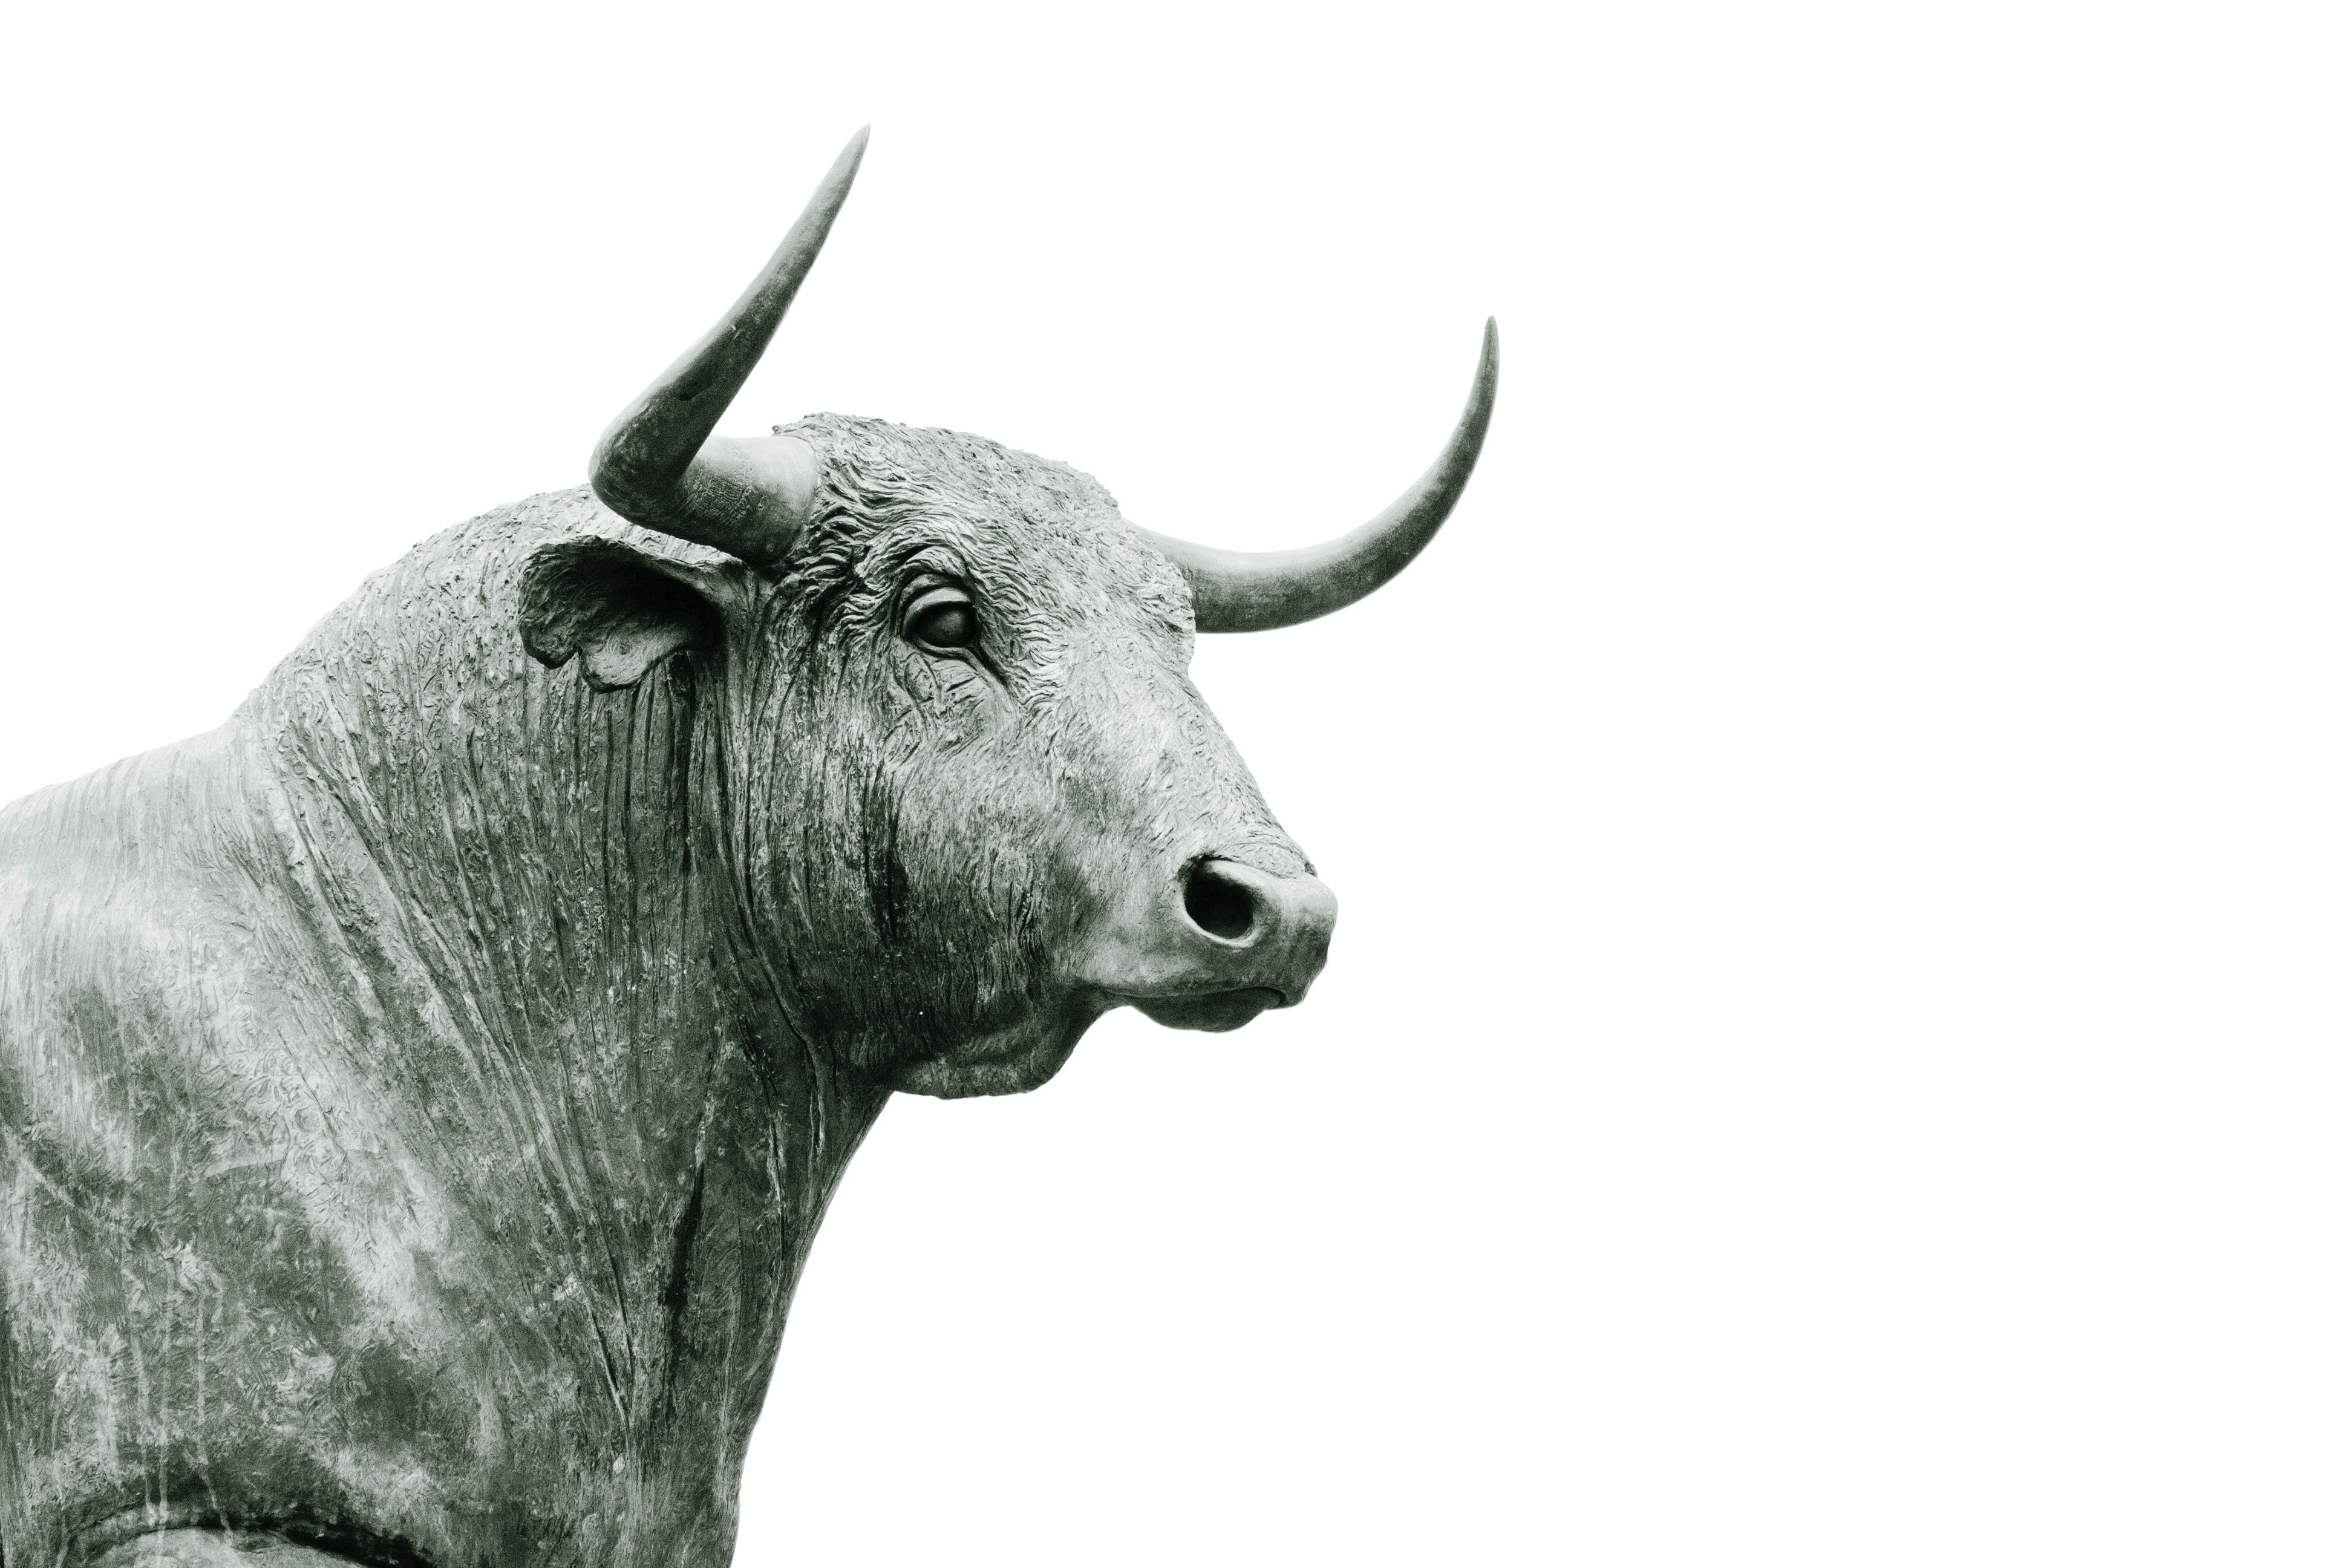 Stone statue of a bull